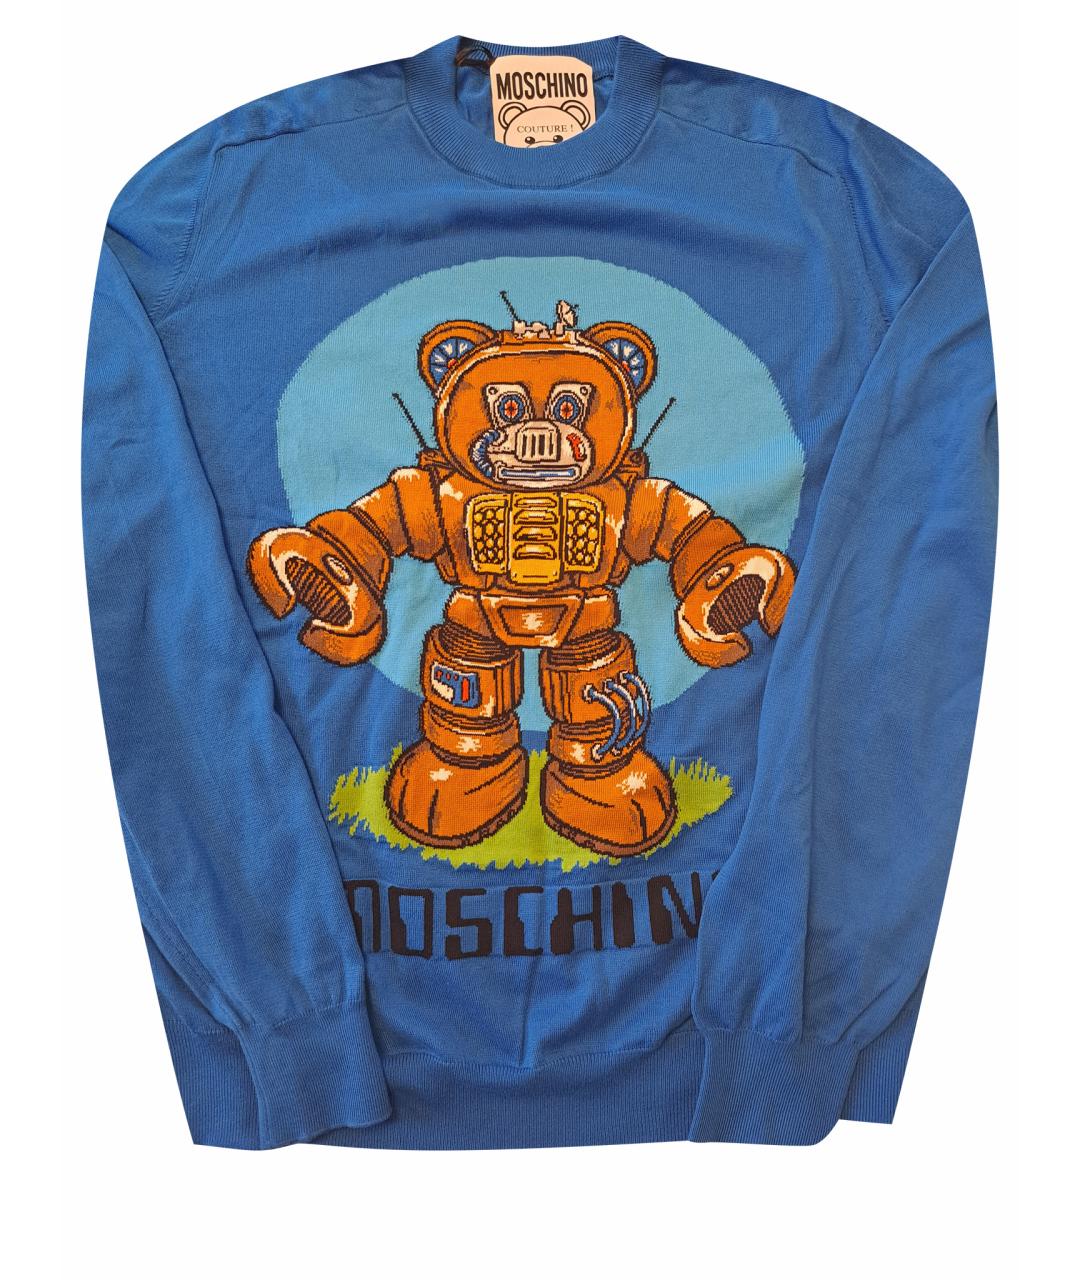 MOSCHINO Голубой полиамидовый джемпер / свитер, фото 1